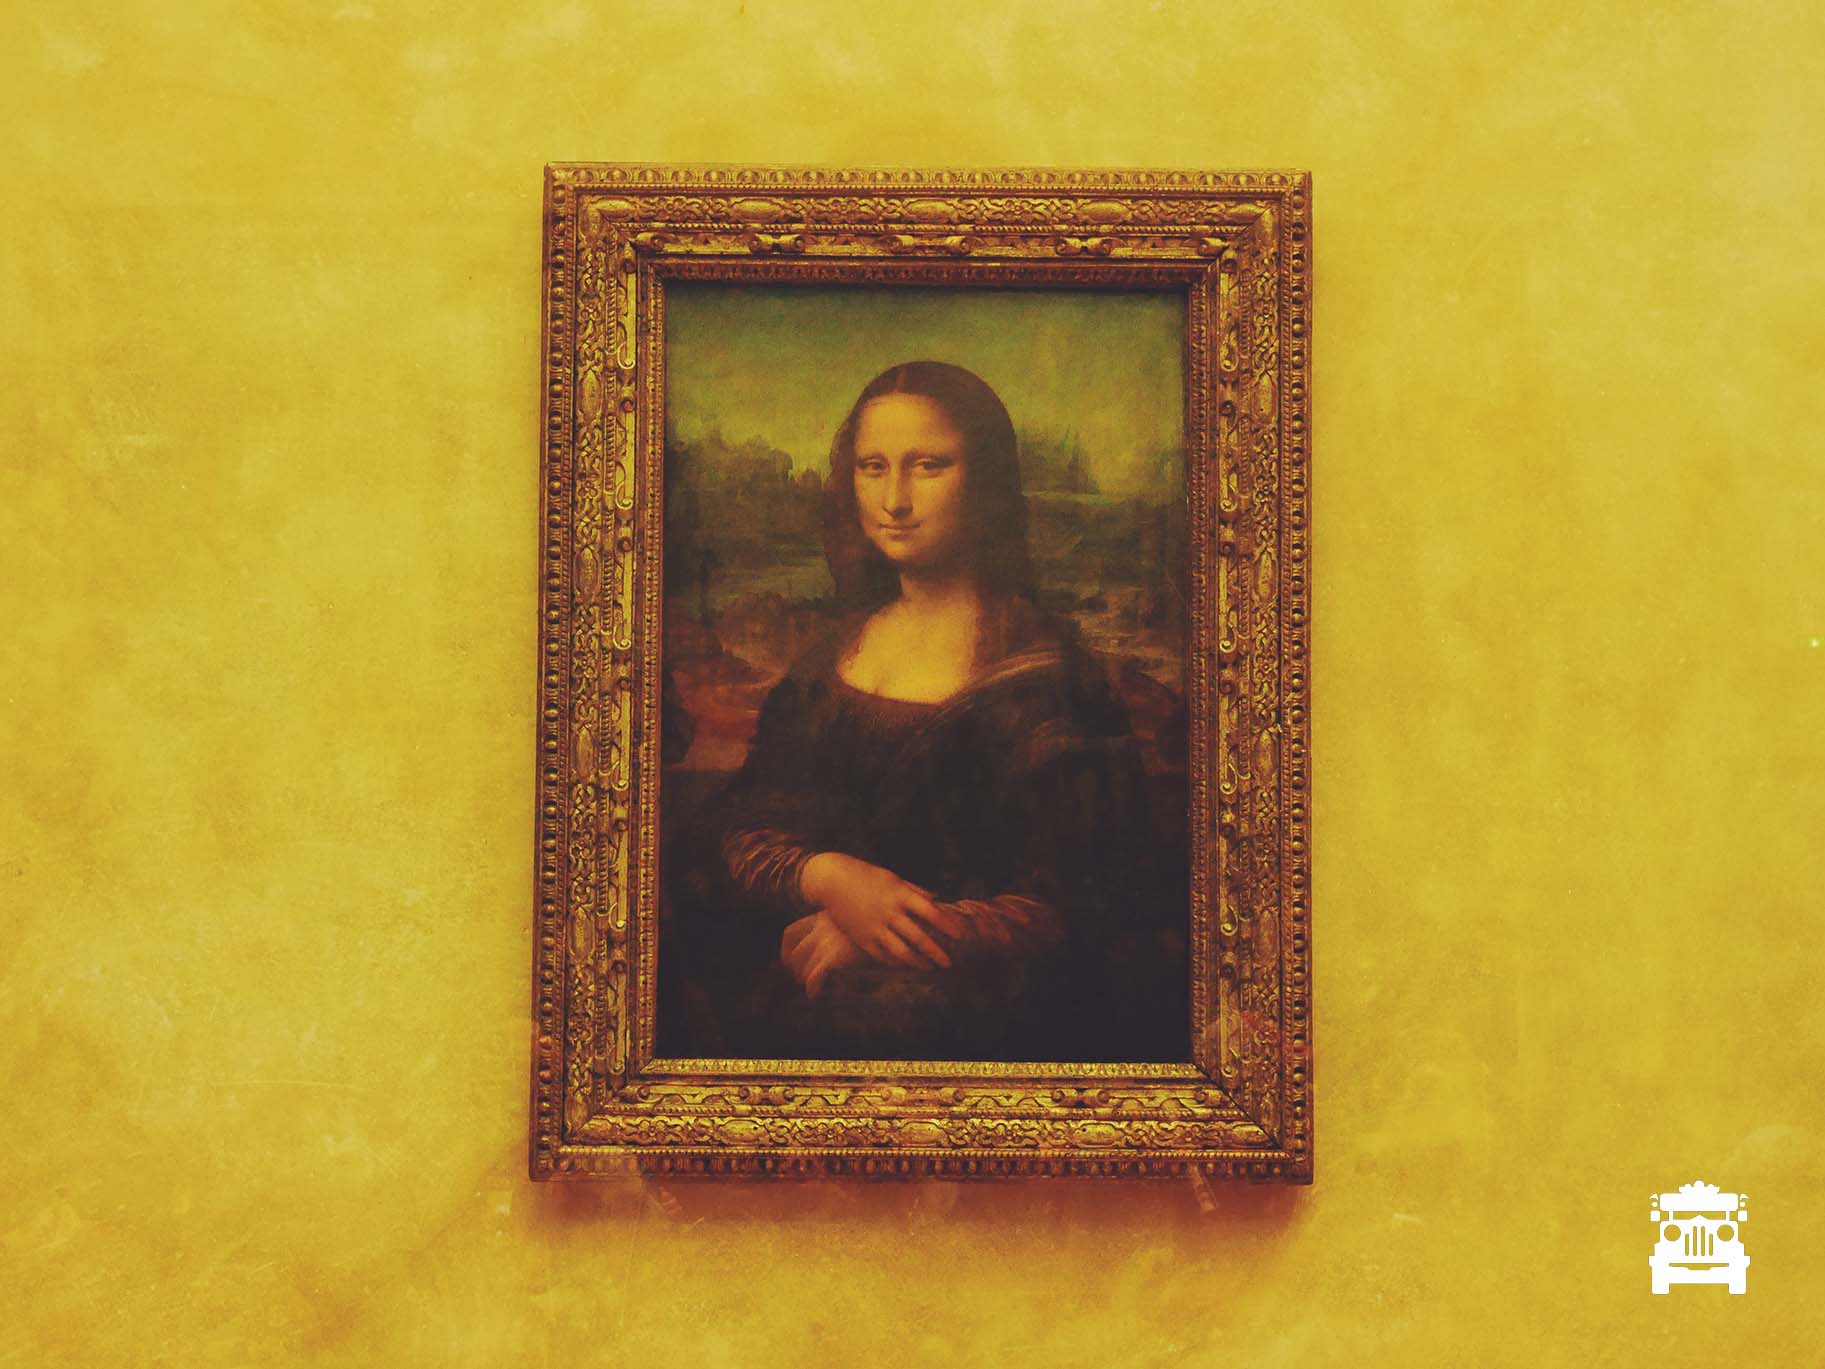 The Mona Lisa